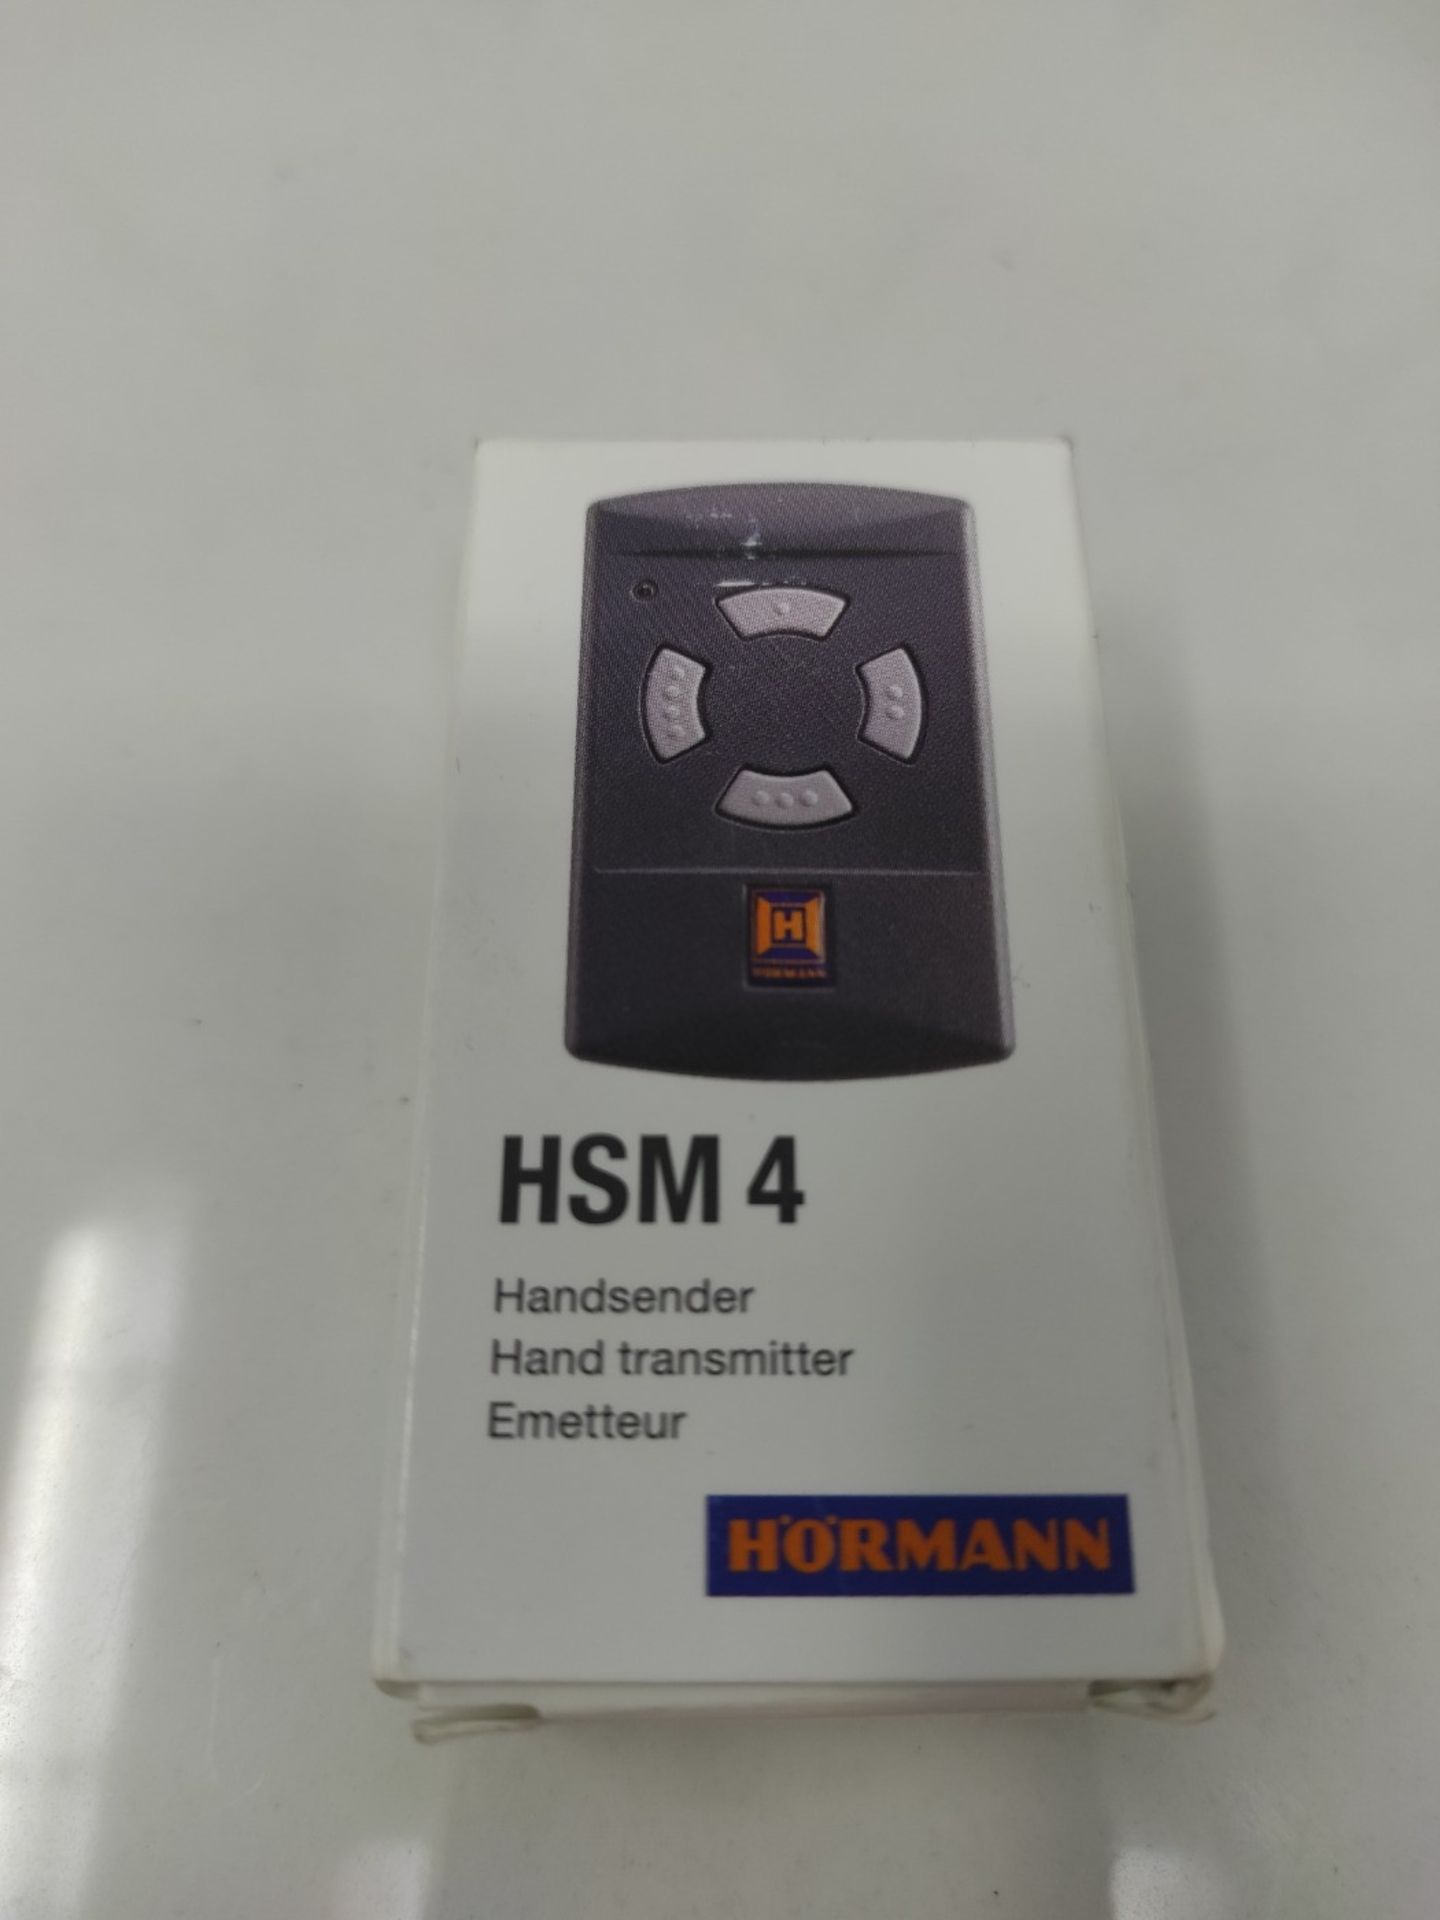 [CRACKED] HÃ¶rmann HSM 4 40,685 MHz - Image 2 of 3